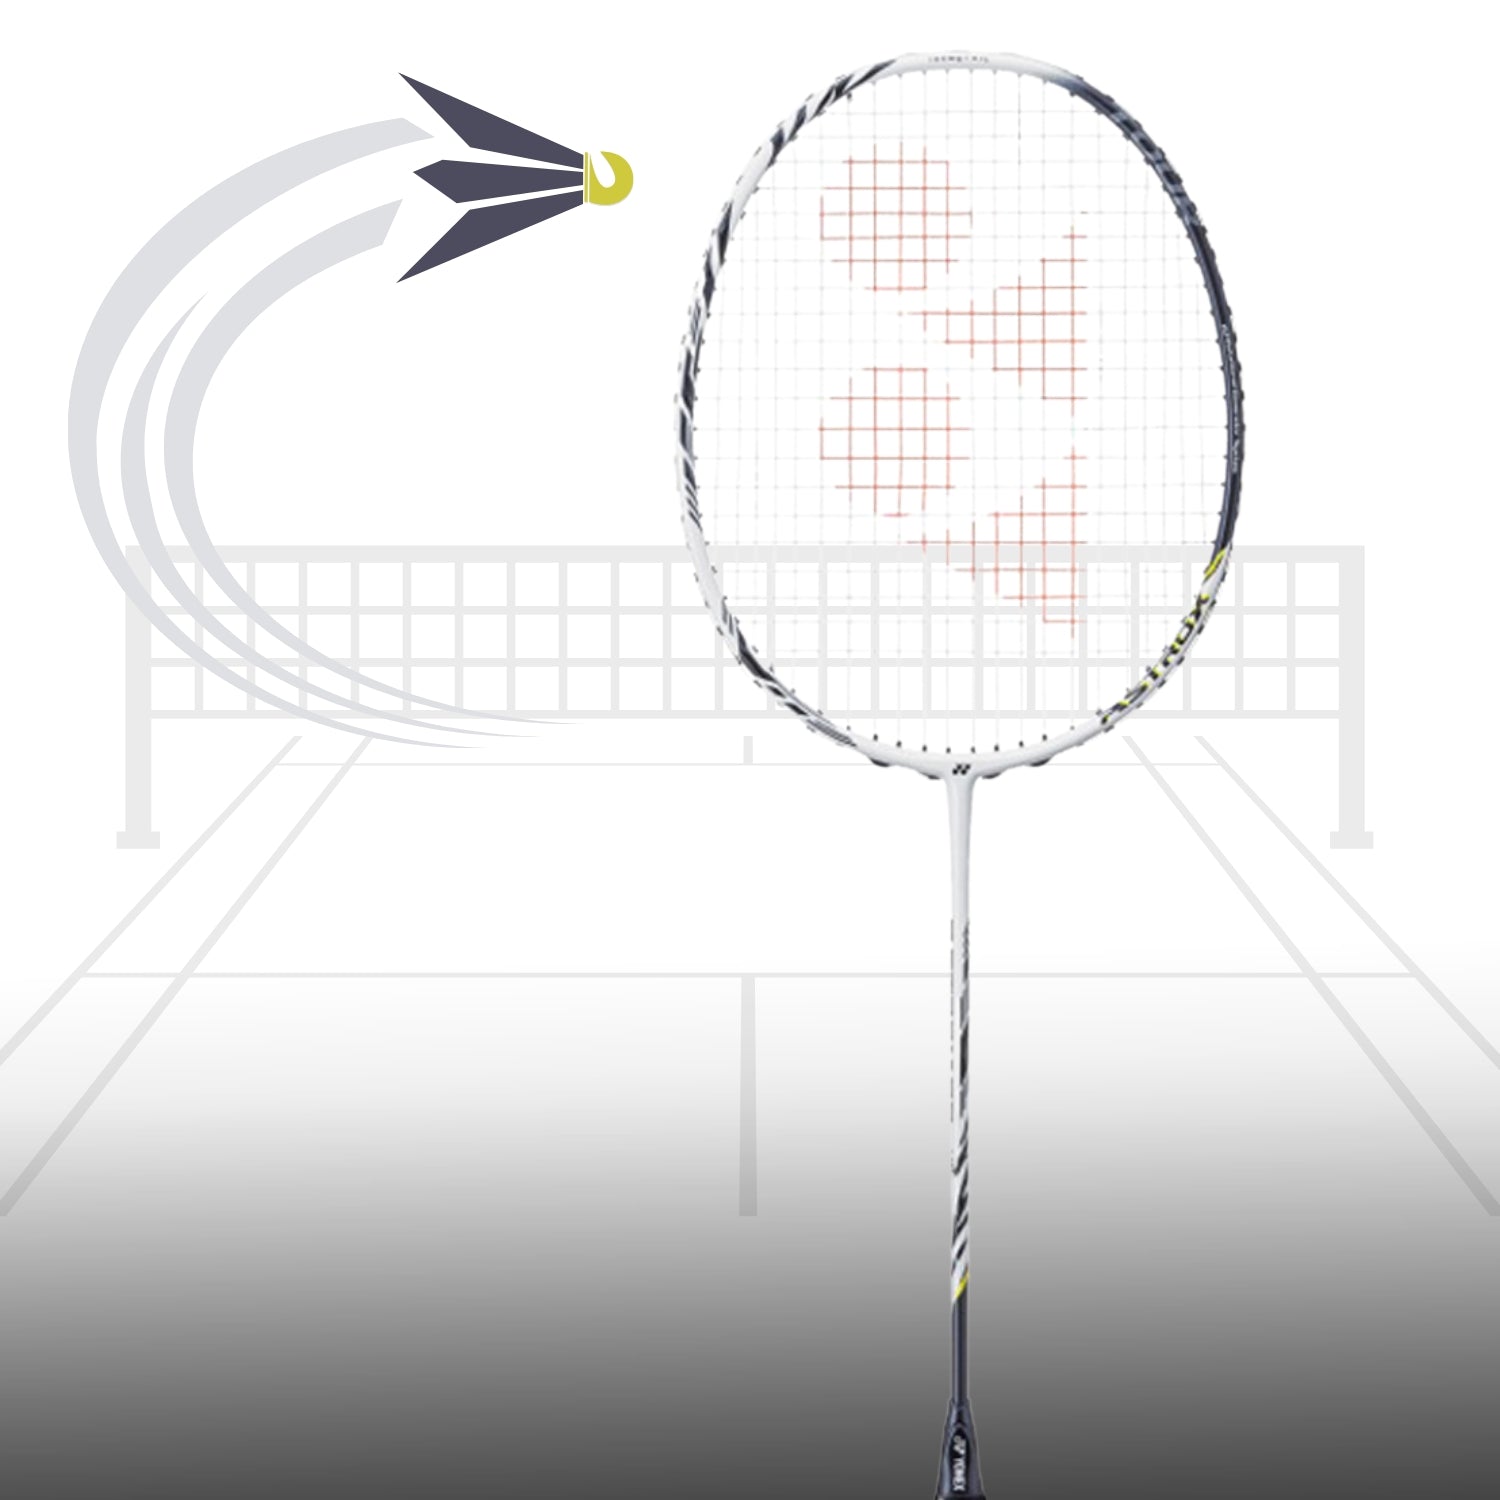 Yonex Astrox 99 TOUR Strung Badminton Racquet, 4U5 - Best Price online Prokicksports.com